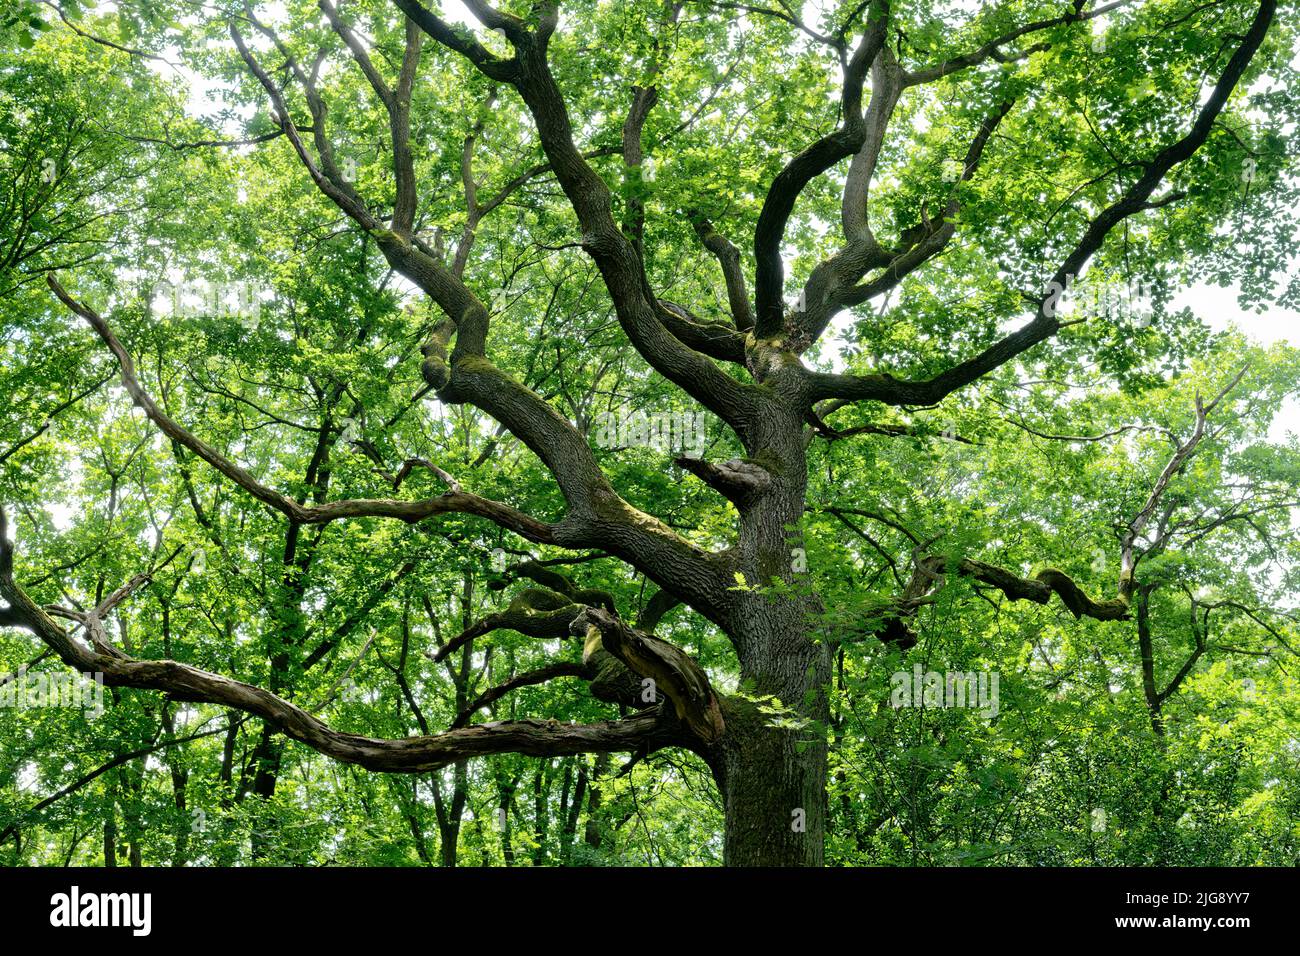 Europe, Germany, North Rhine-Westphalia, Stockheim, Stockheimer forest, tree, oak, Quercus, green, spring, sun, nobody, no people Stock Photo